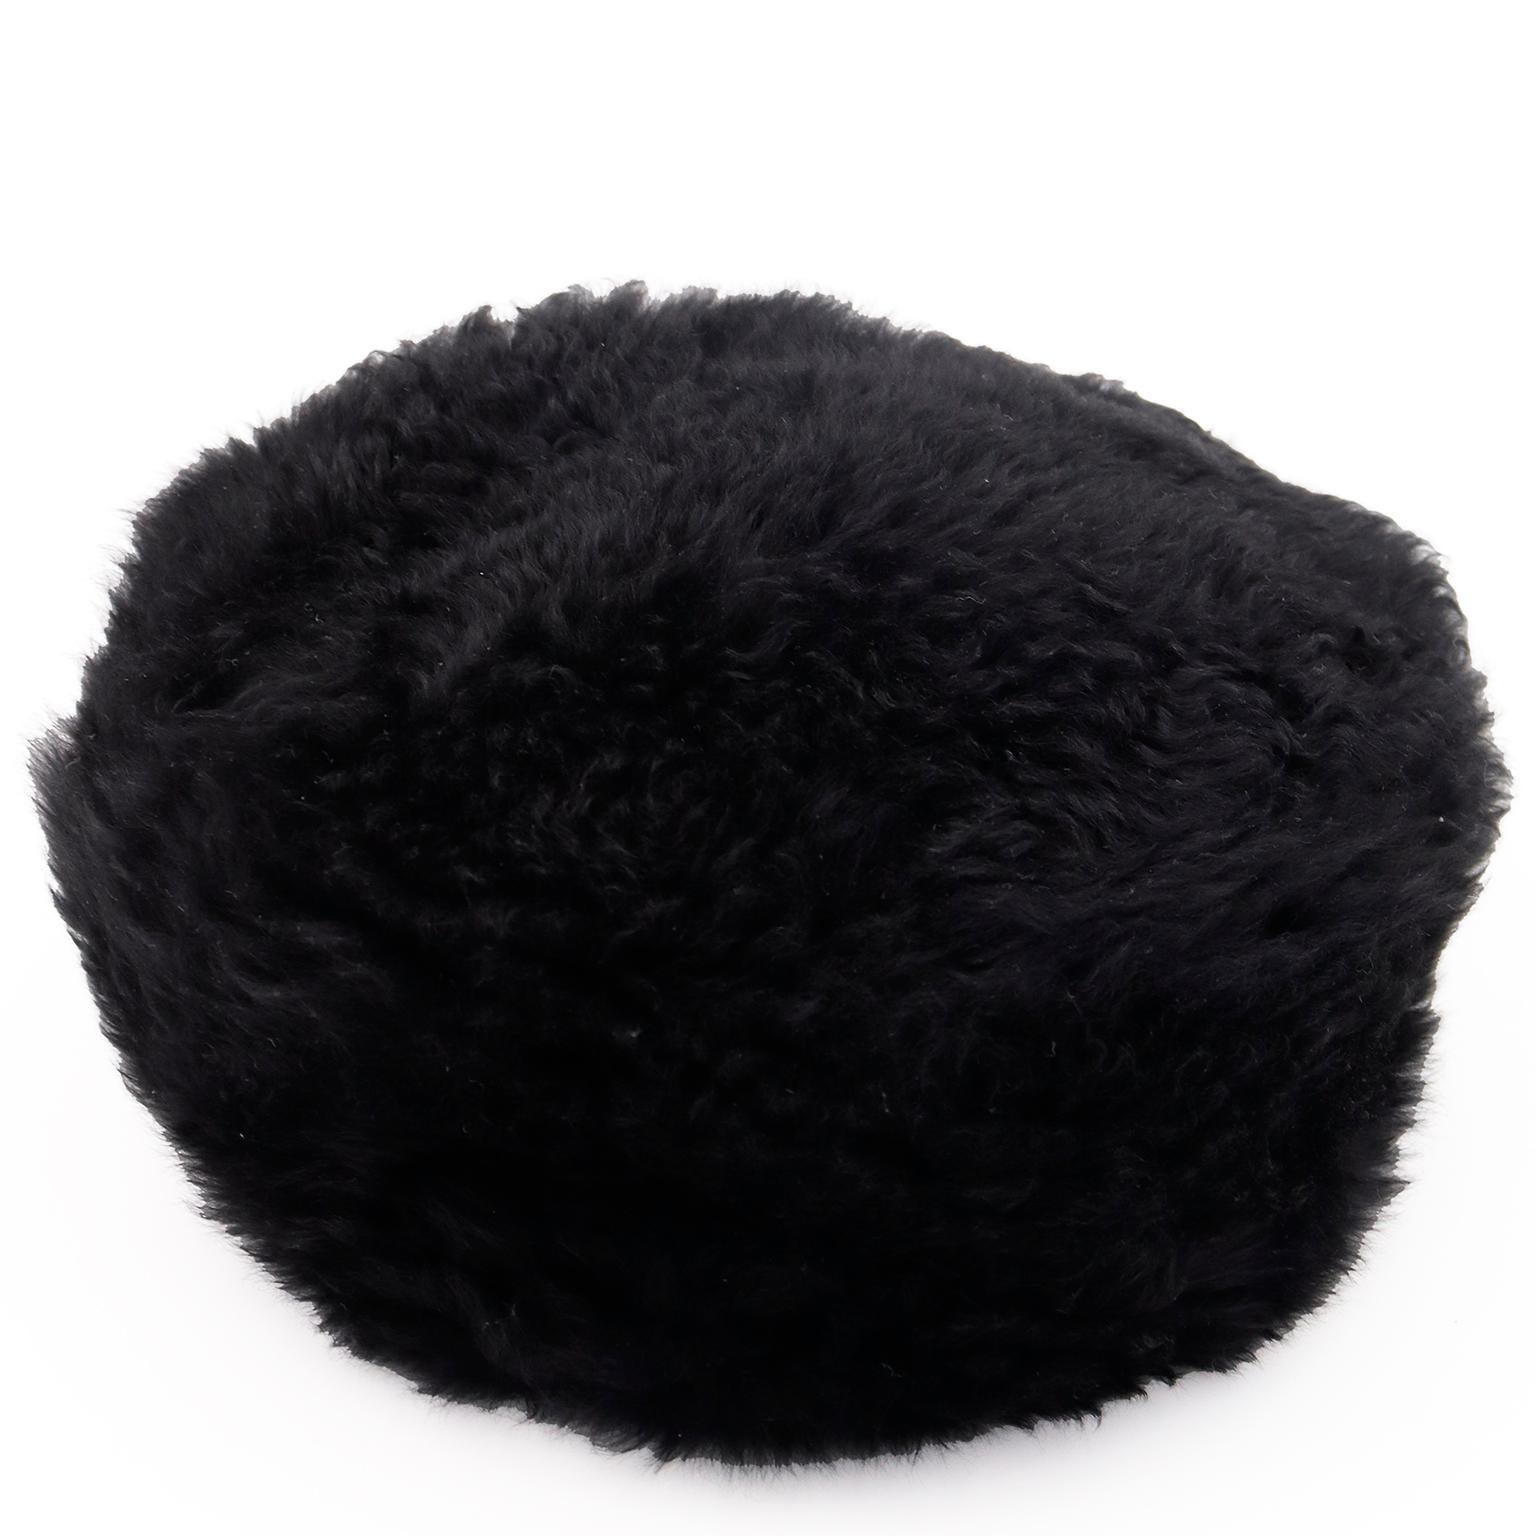 Yves Saint Laurent 1970s Russian inspired Vintage Black Fur Hat 3